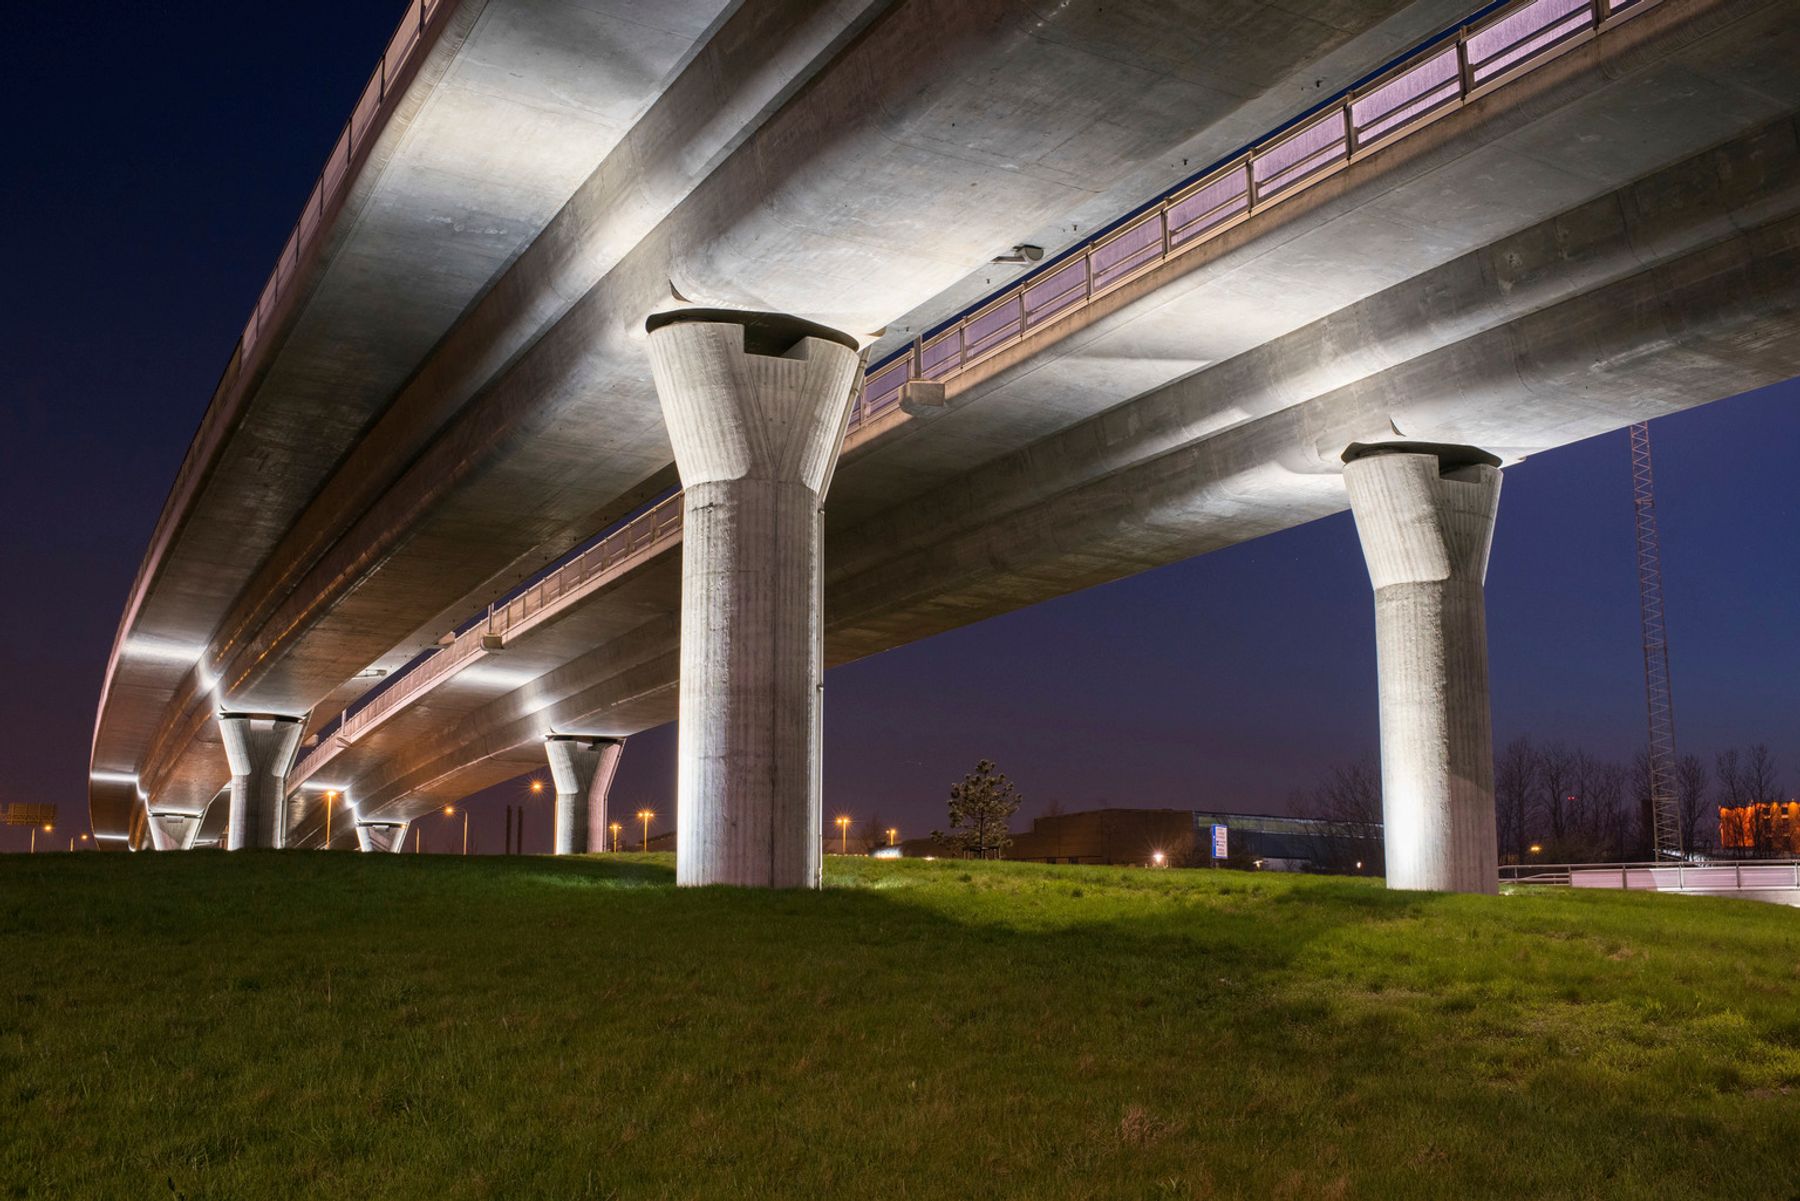 Viaducto de autopista Trafikplats Spillepengen, Malmö. Diseño de iluminación: Malmö City, Johan Moritz. Fotografía: Johan Elm, Estocolmo.